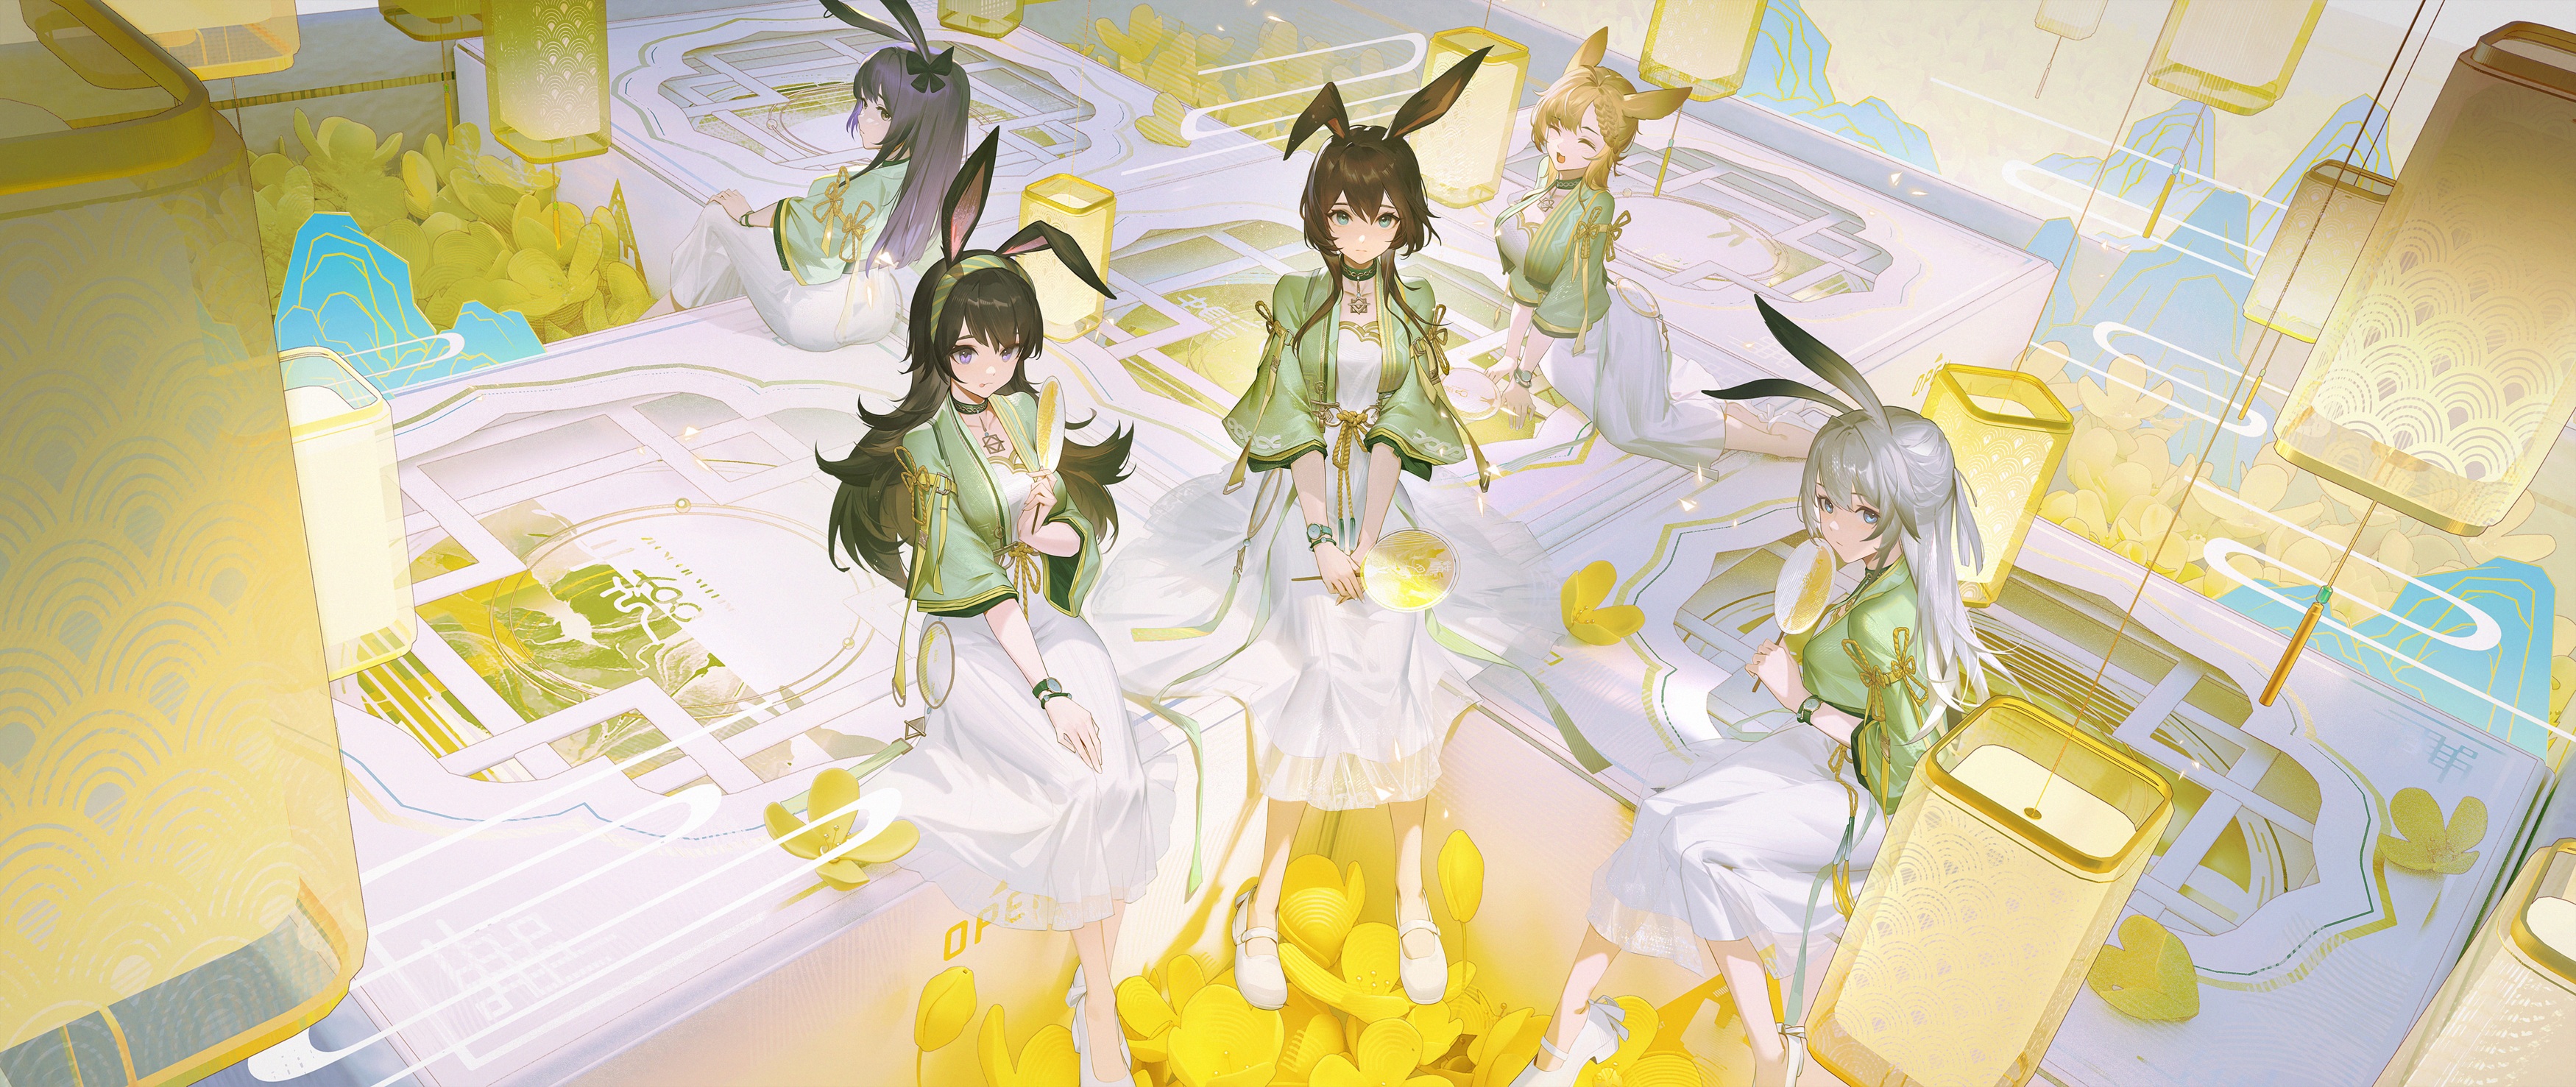 Arknights Bunny Ears Anime Girls Dacheng Ad Group Of Women Sitting Animal Ears Paper Lantern Looking 3500x1477